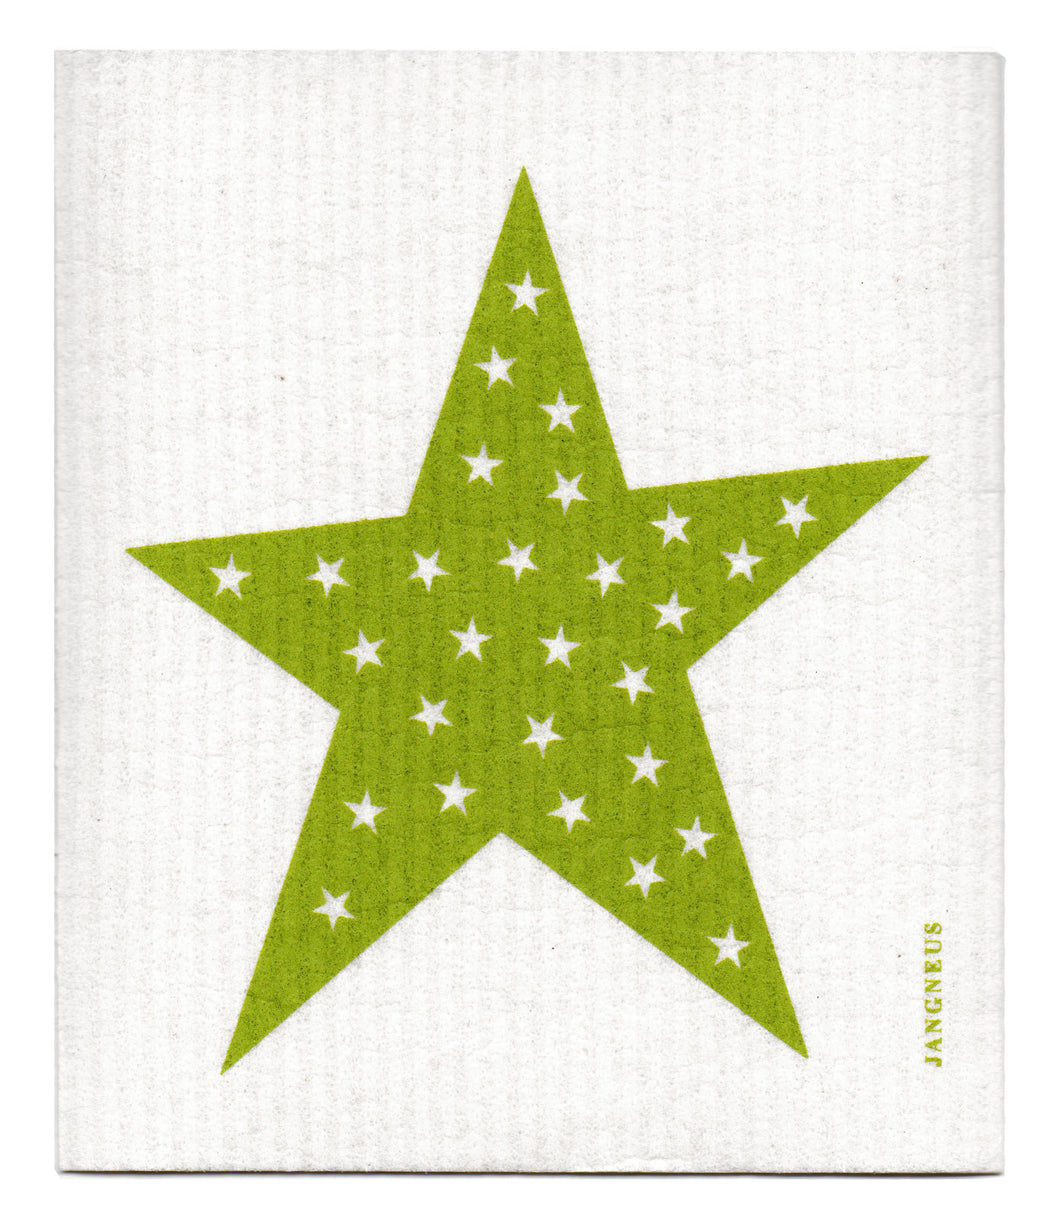 Big Star (Green)